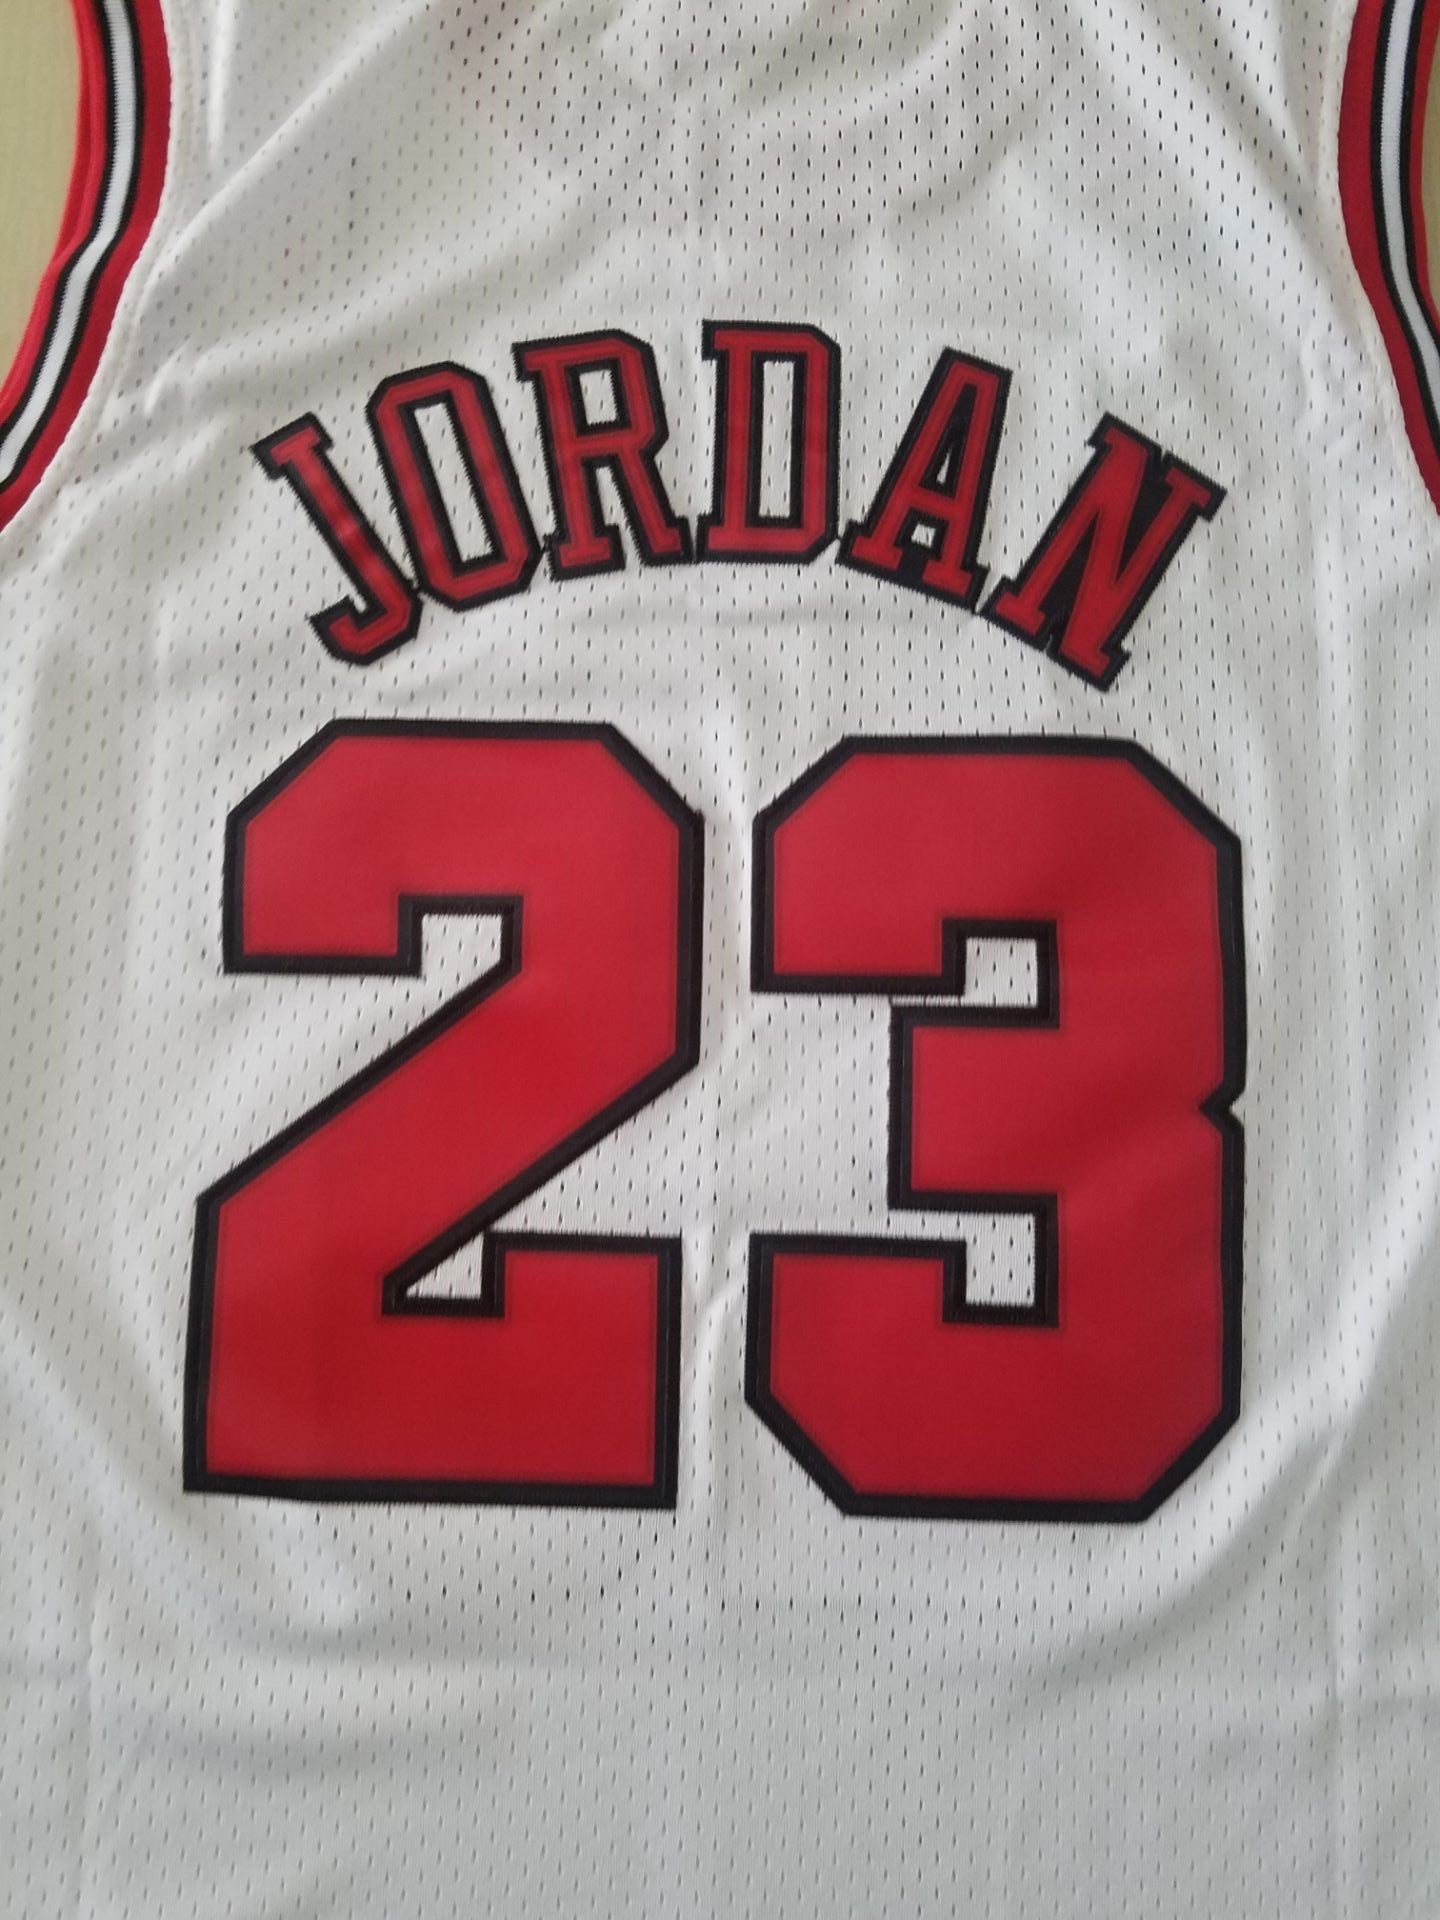 Men's Chicago Bulls Michael Jordan White 1997-98 Hardwood Classics Player Jersey